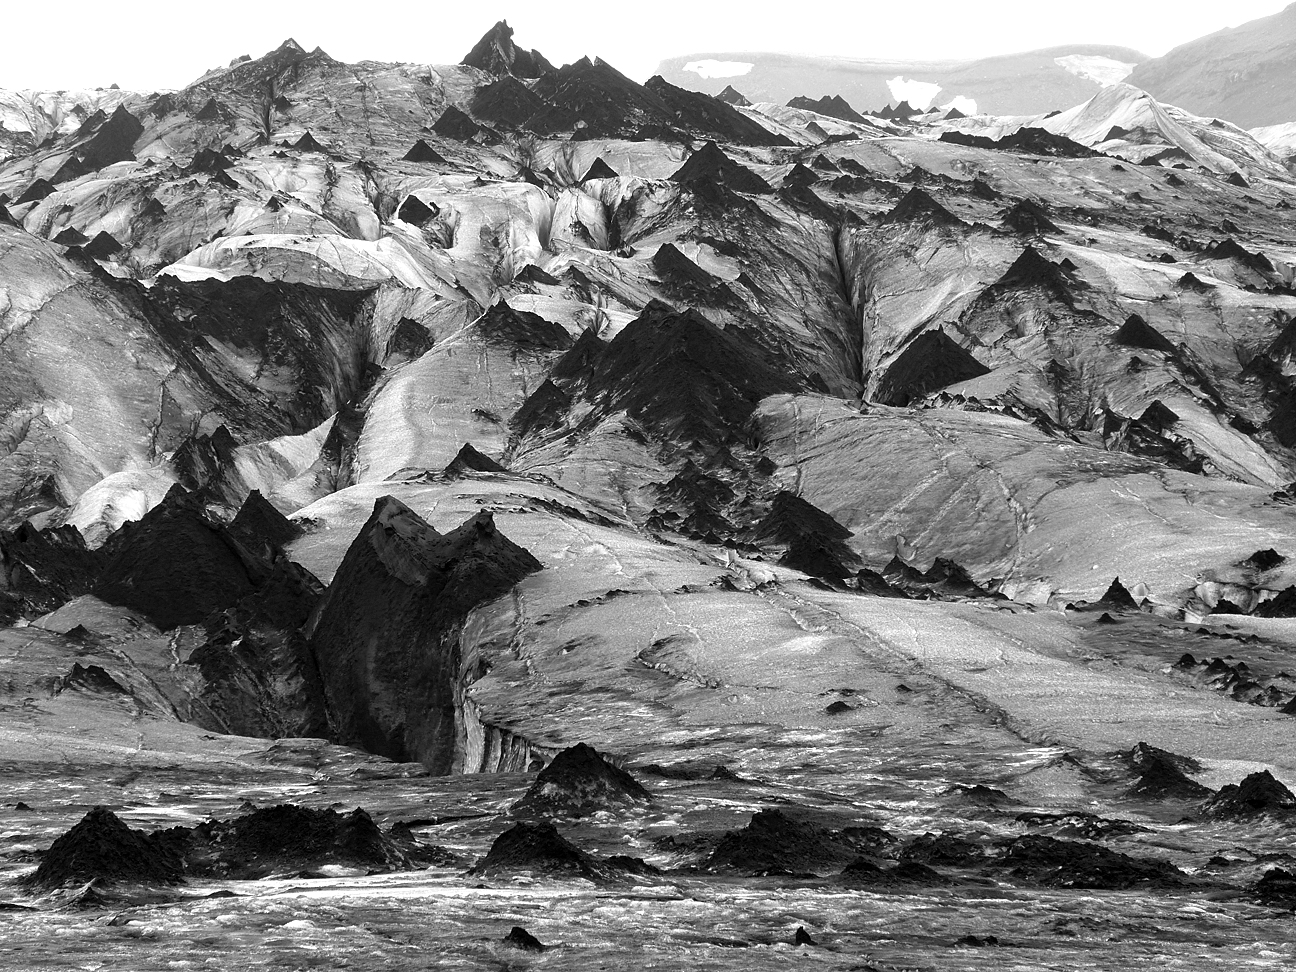 Solheimajokull Glacier